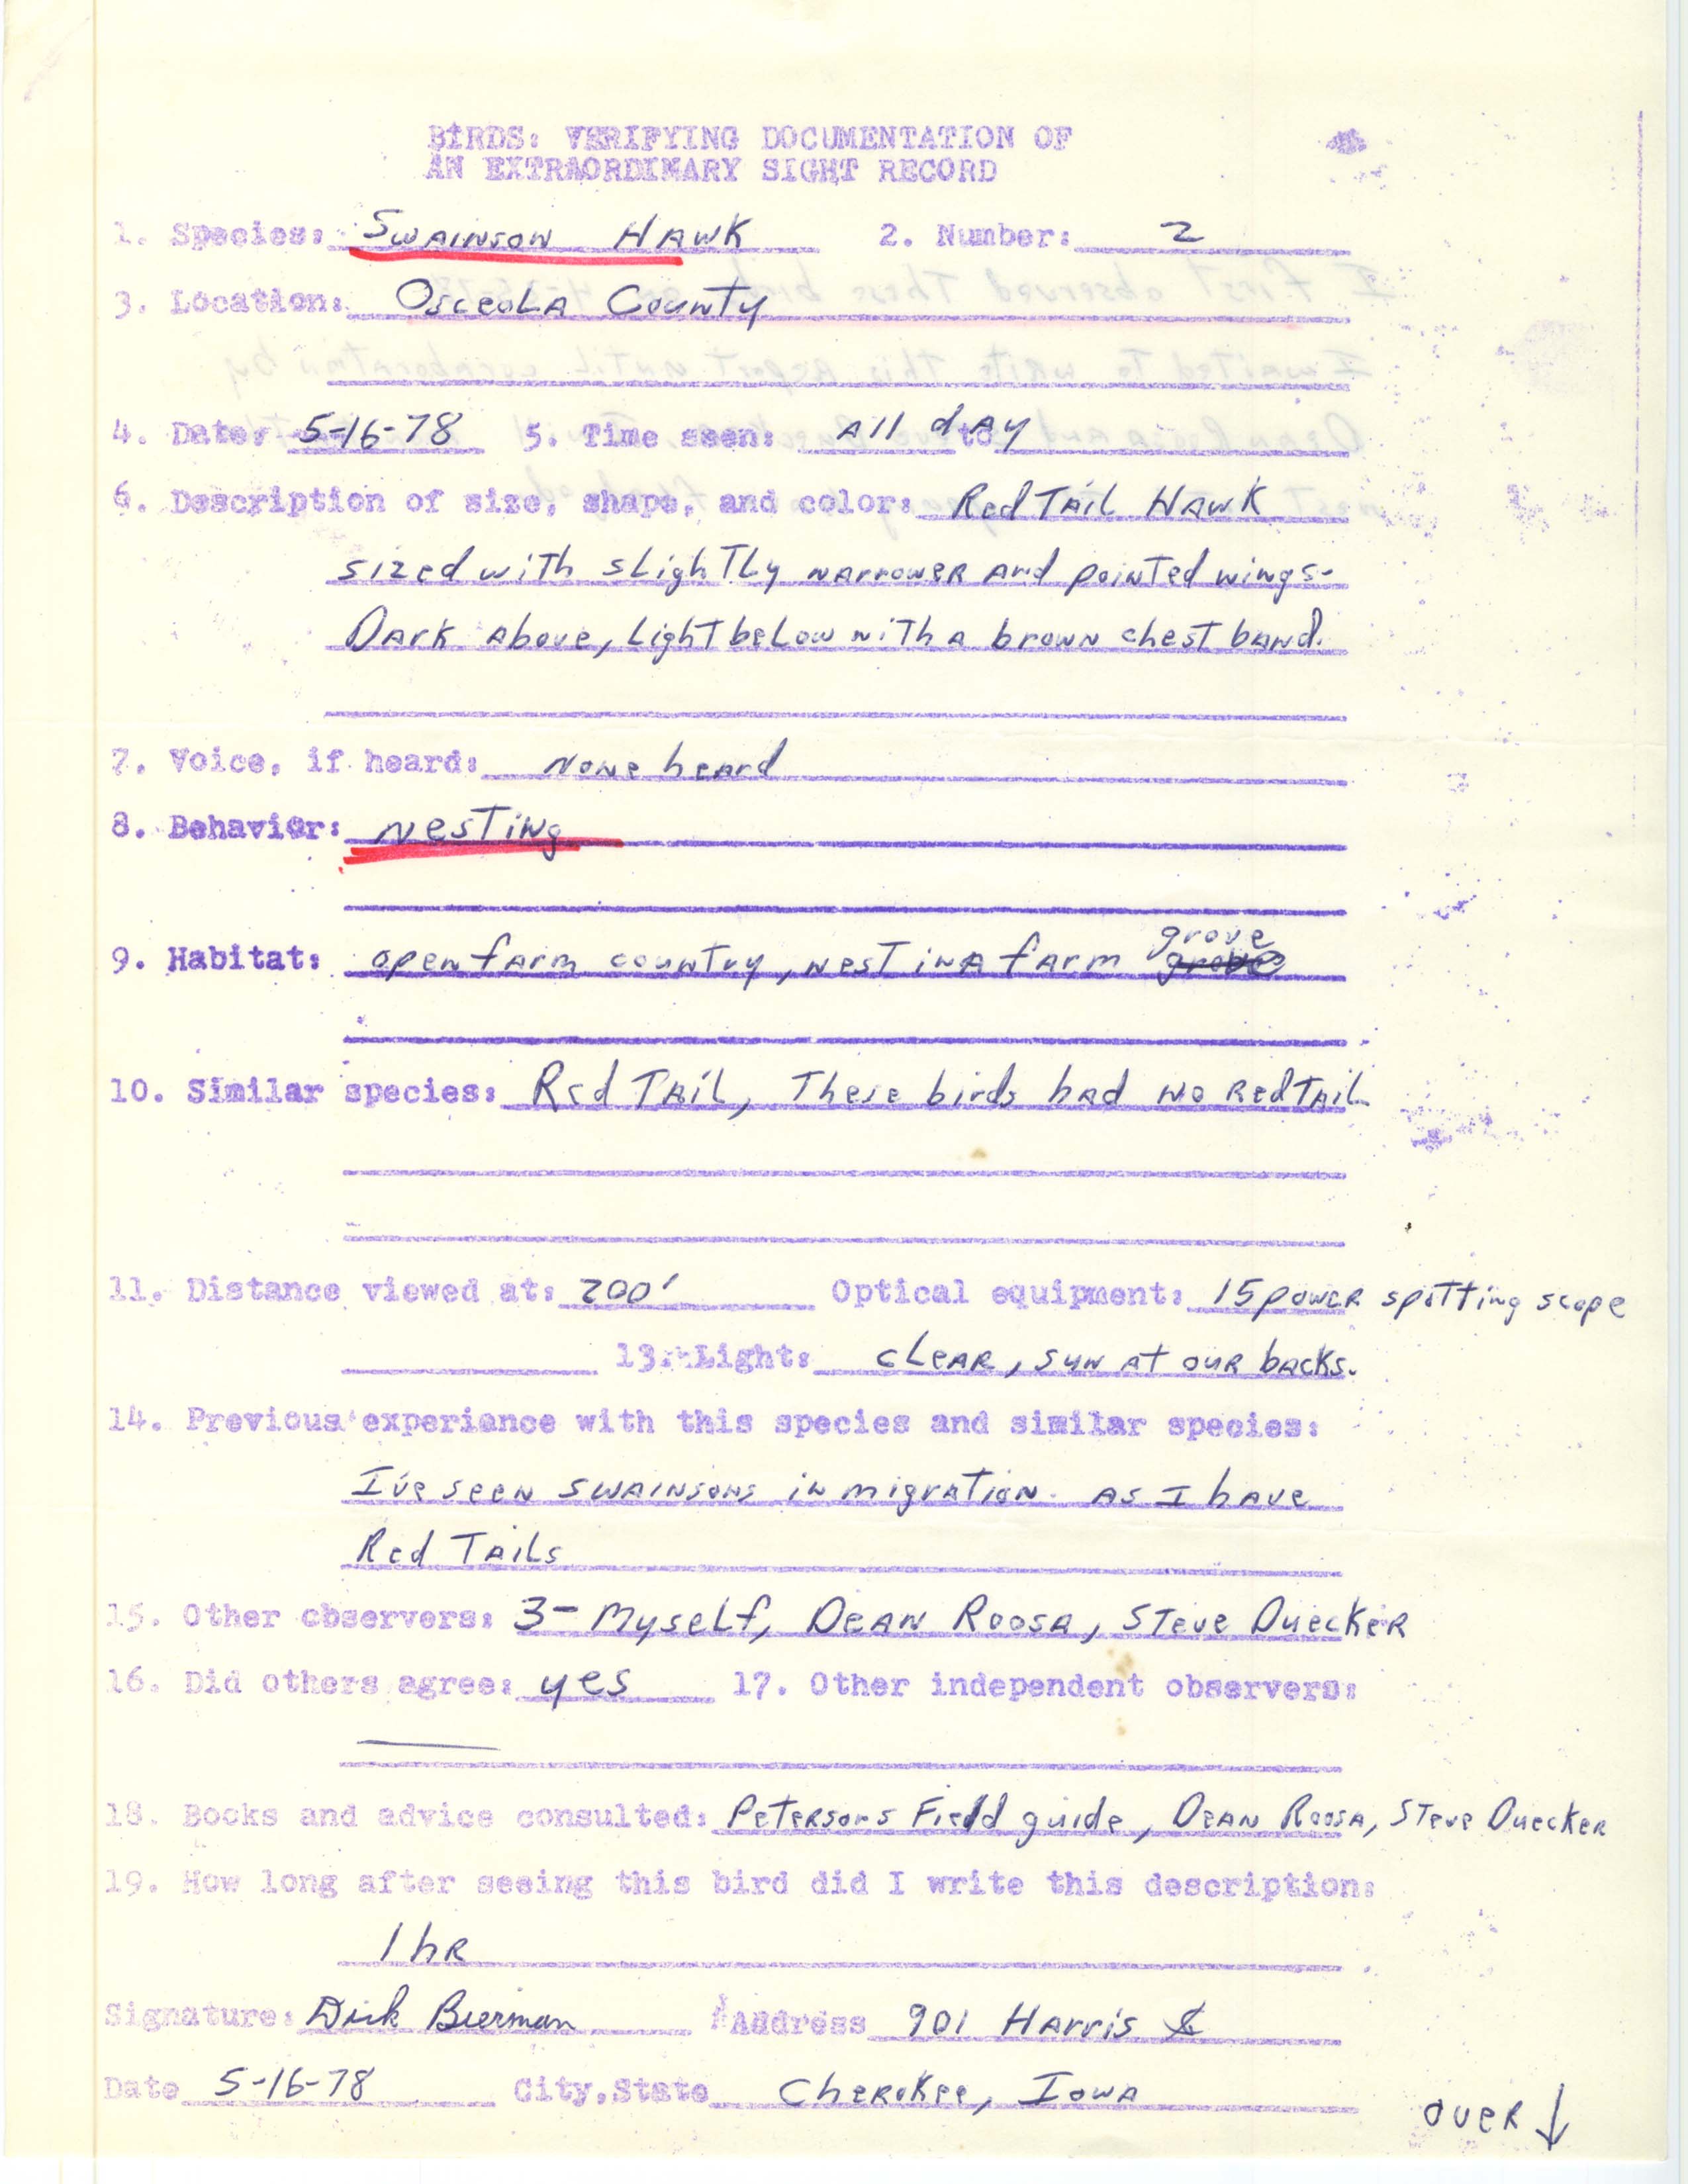 Rare bird documentation form for Swainson's Hawk at Osceola County, 1978